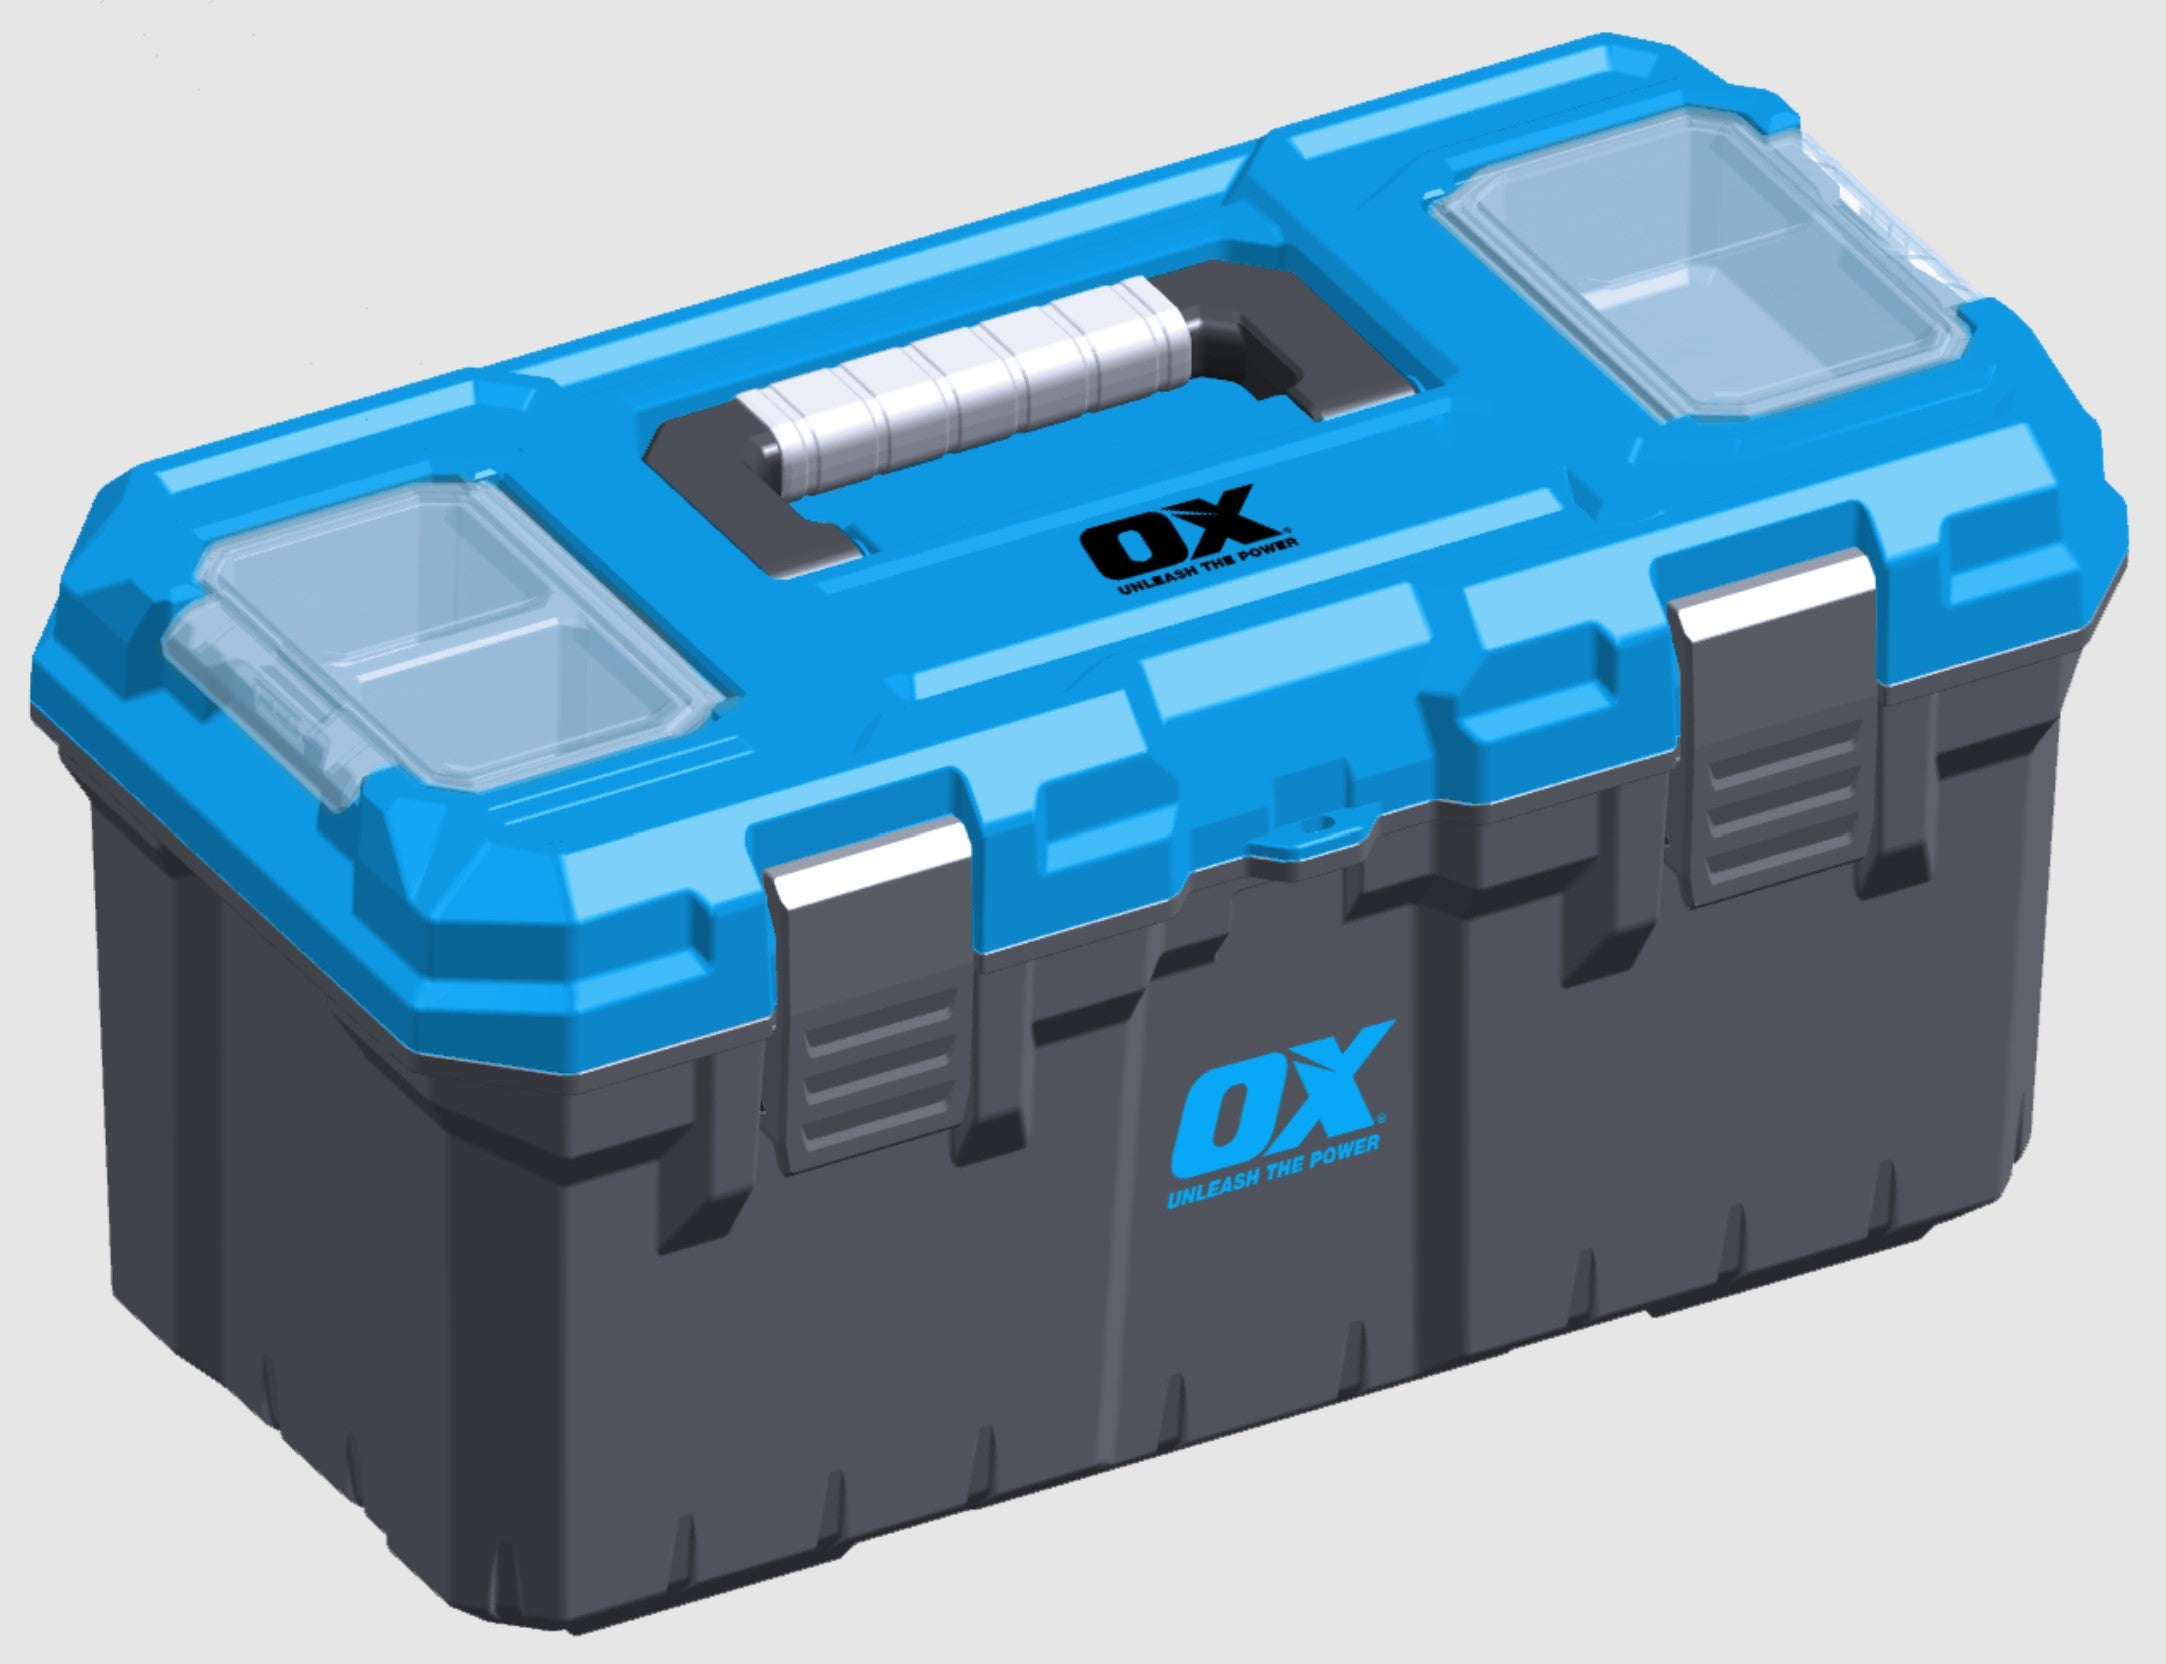 Ox Trade Tool Storage Boxes